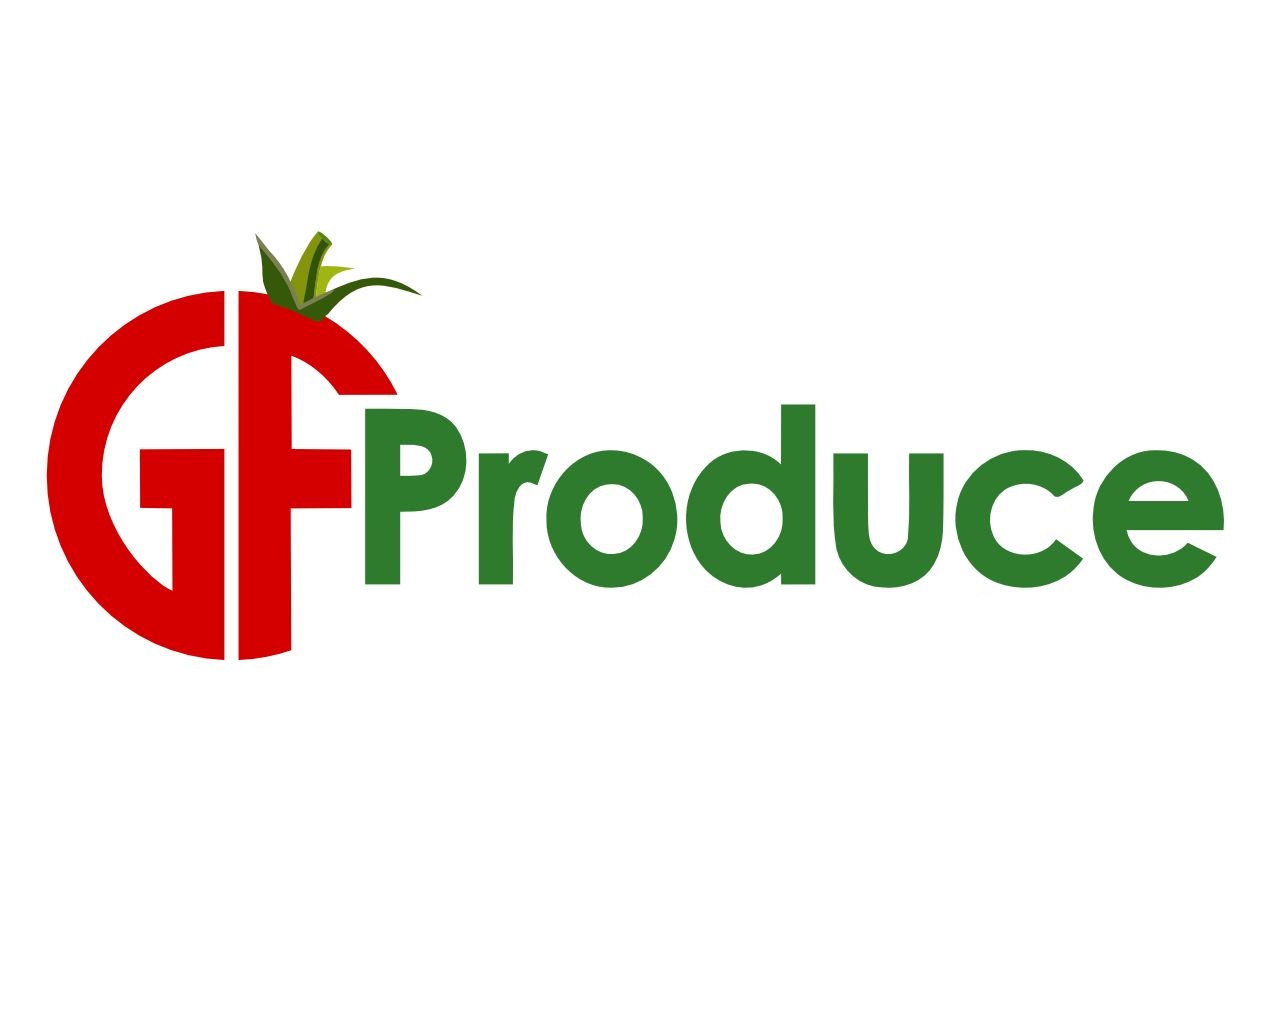 GF Produce